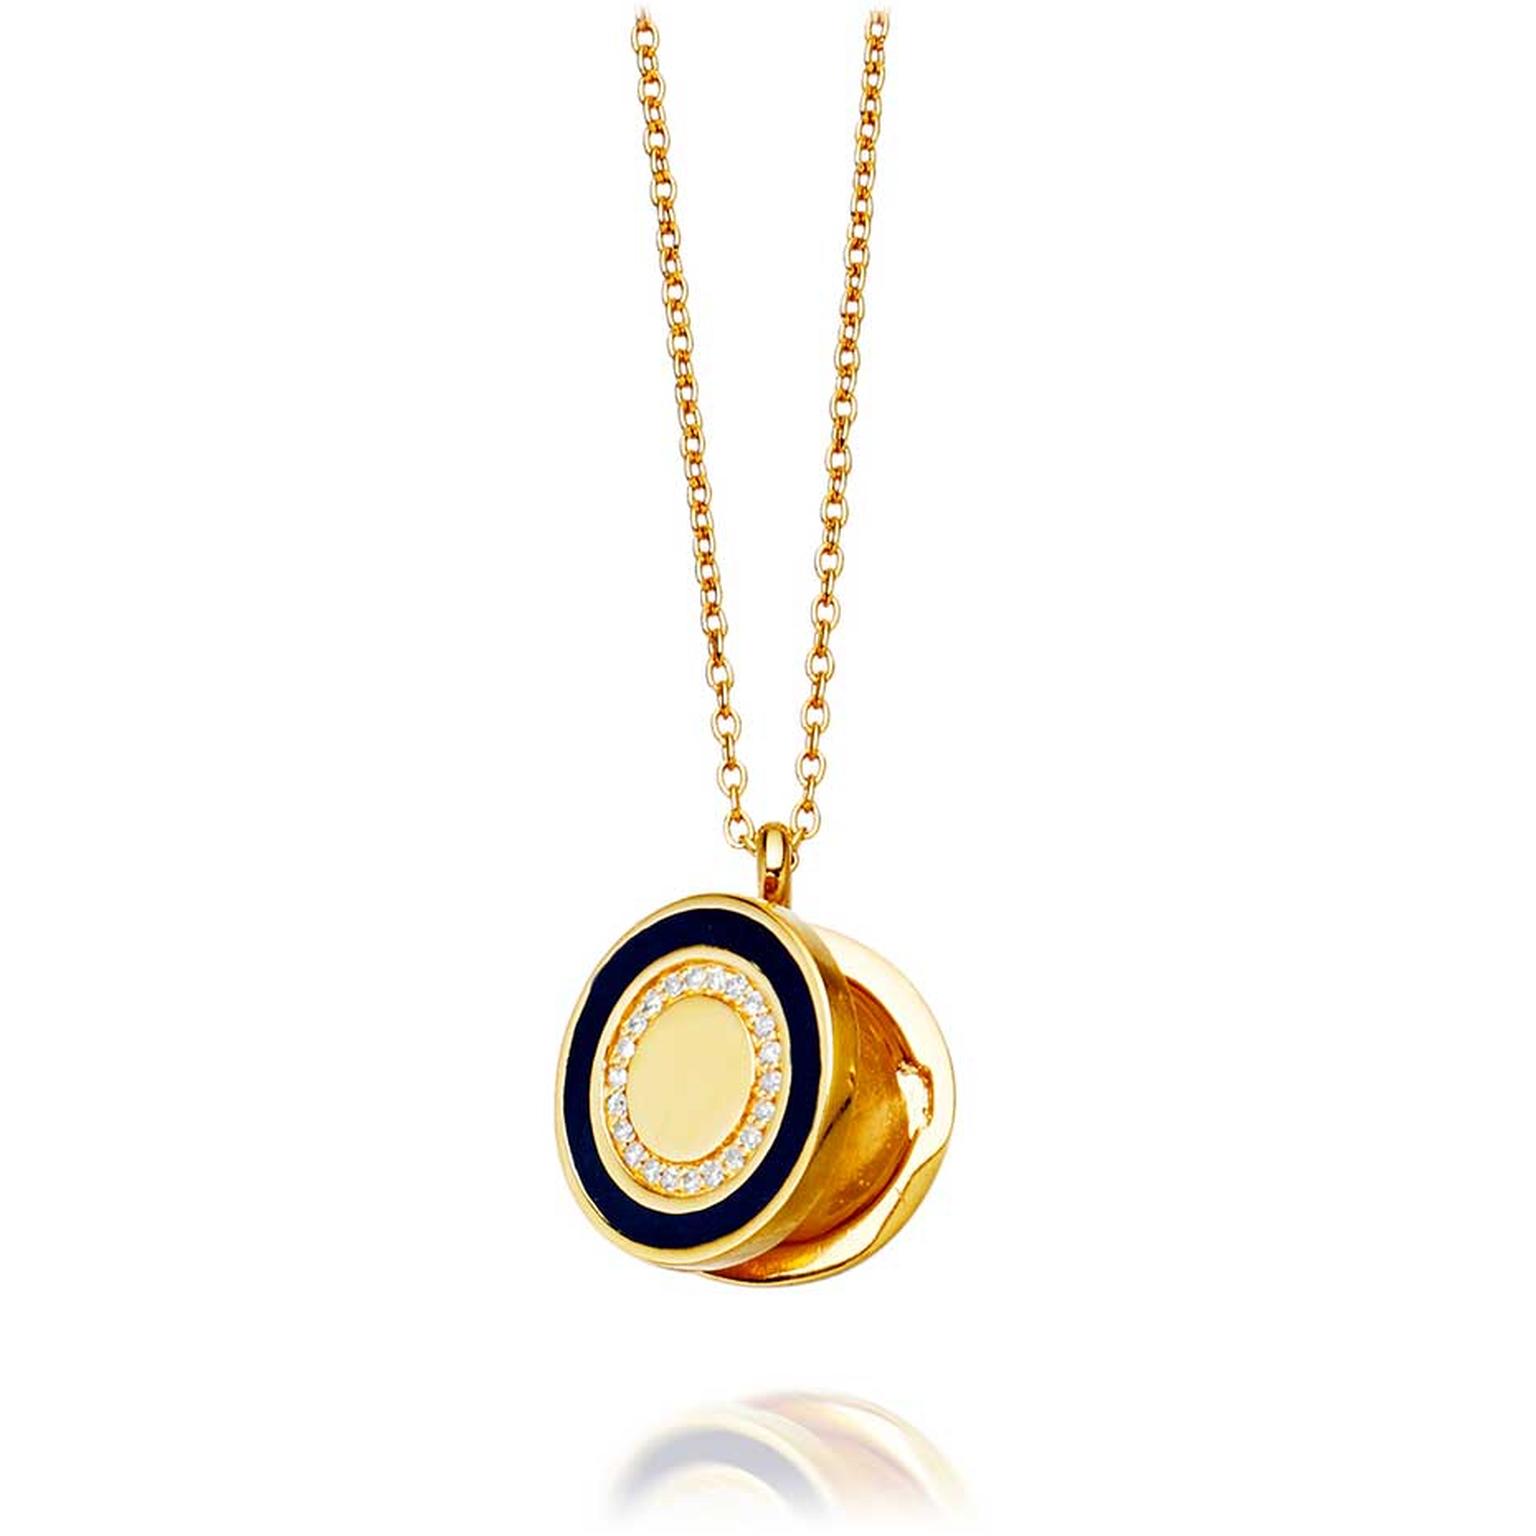 Astley Clarke Midnight Cosmos locket in gold with diamonds (£995.00).